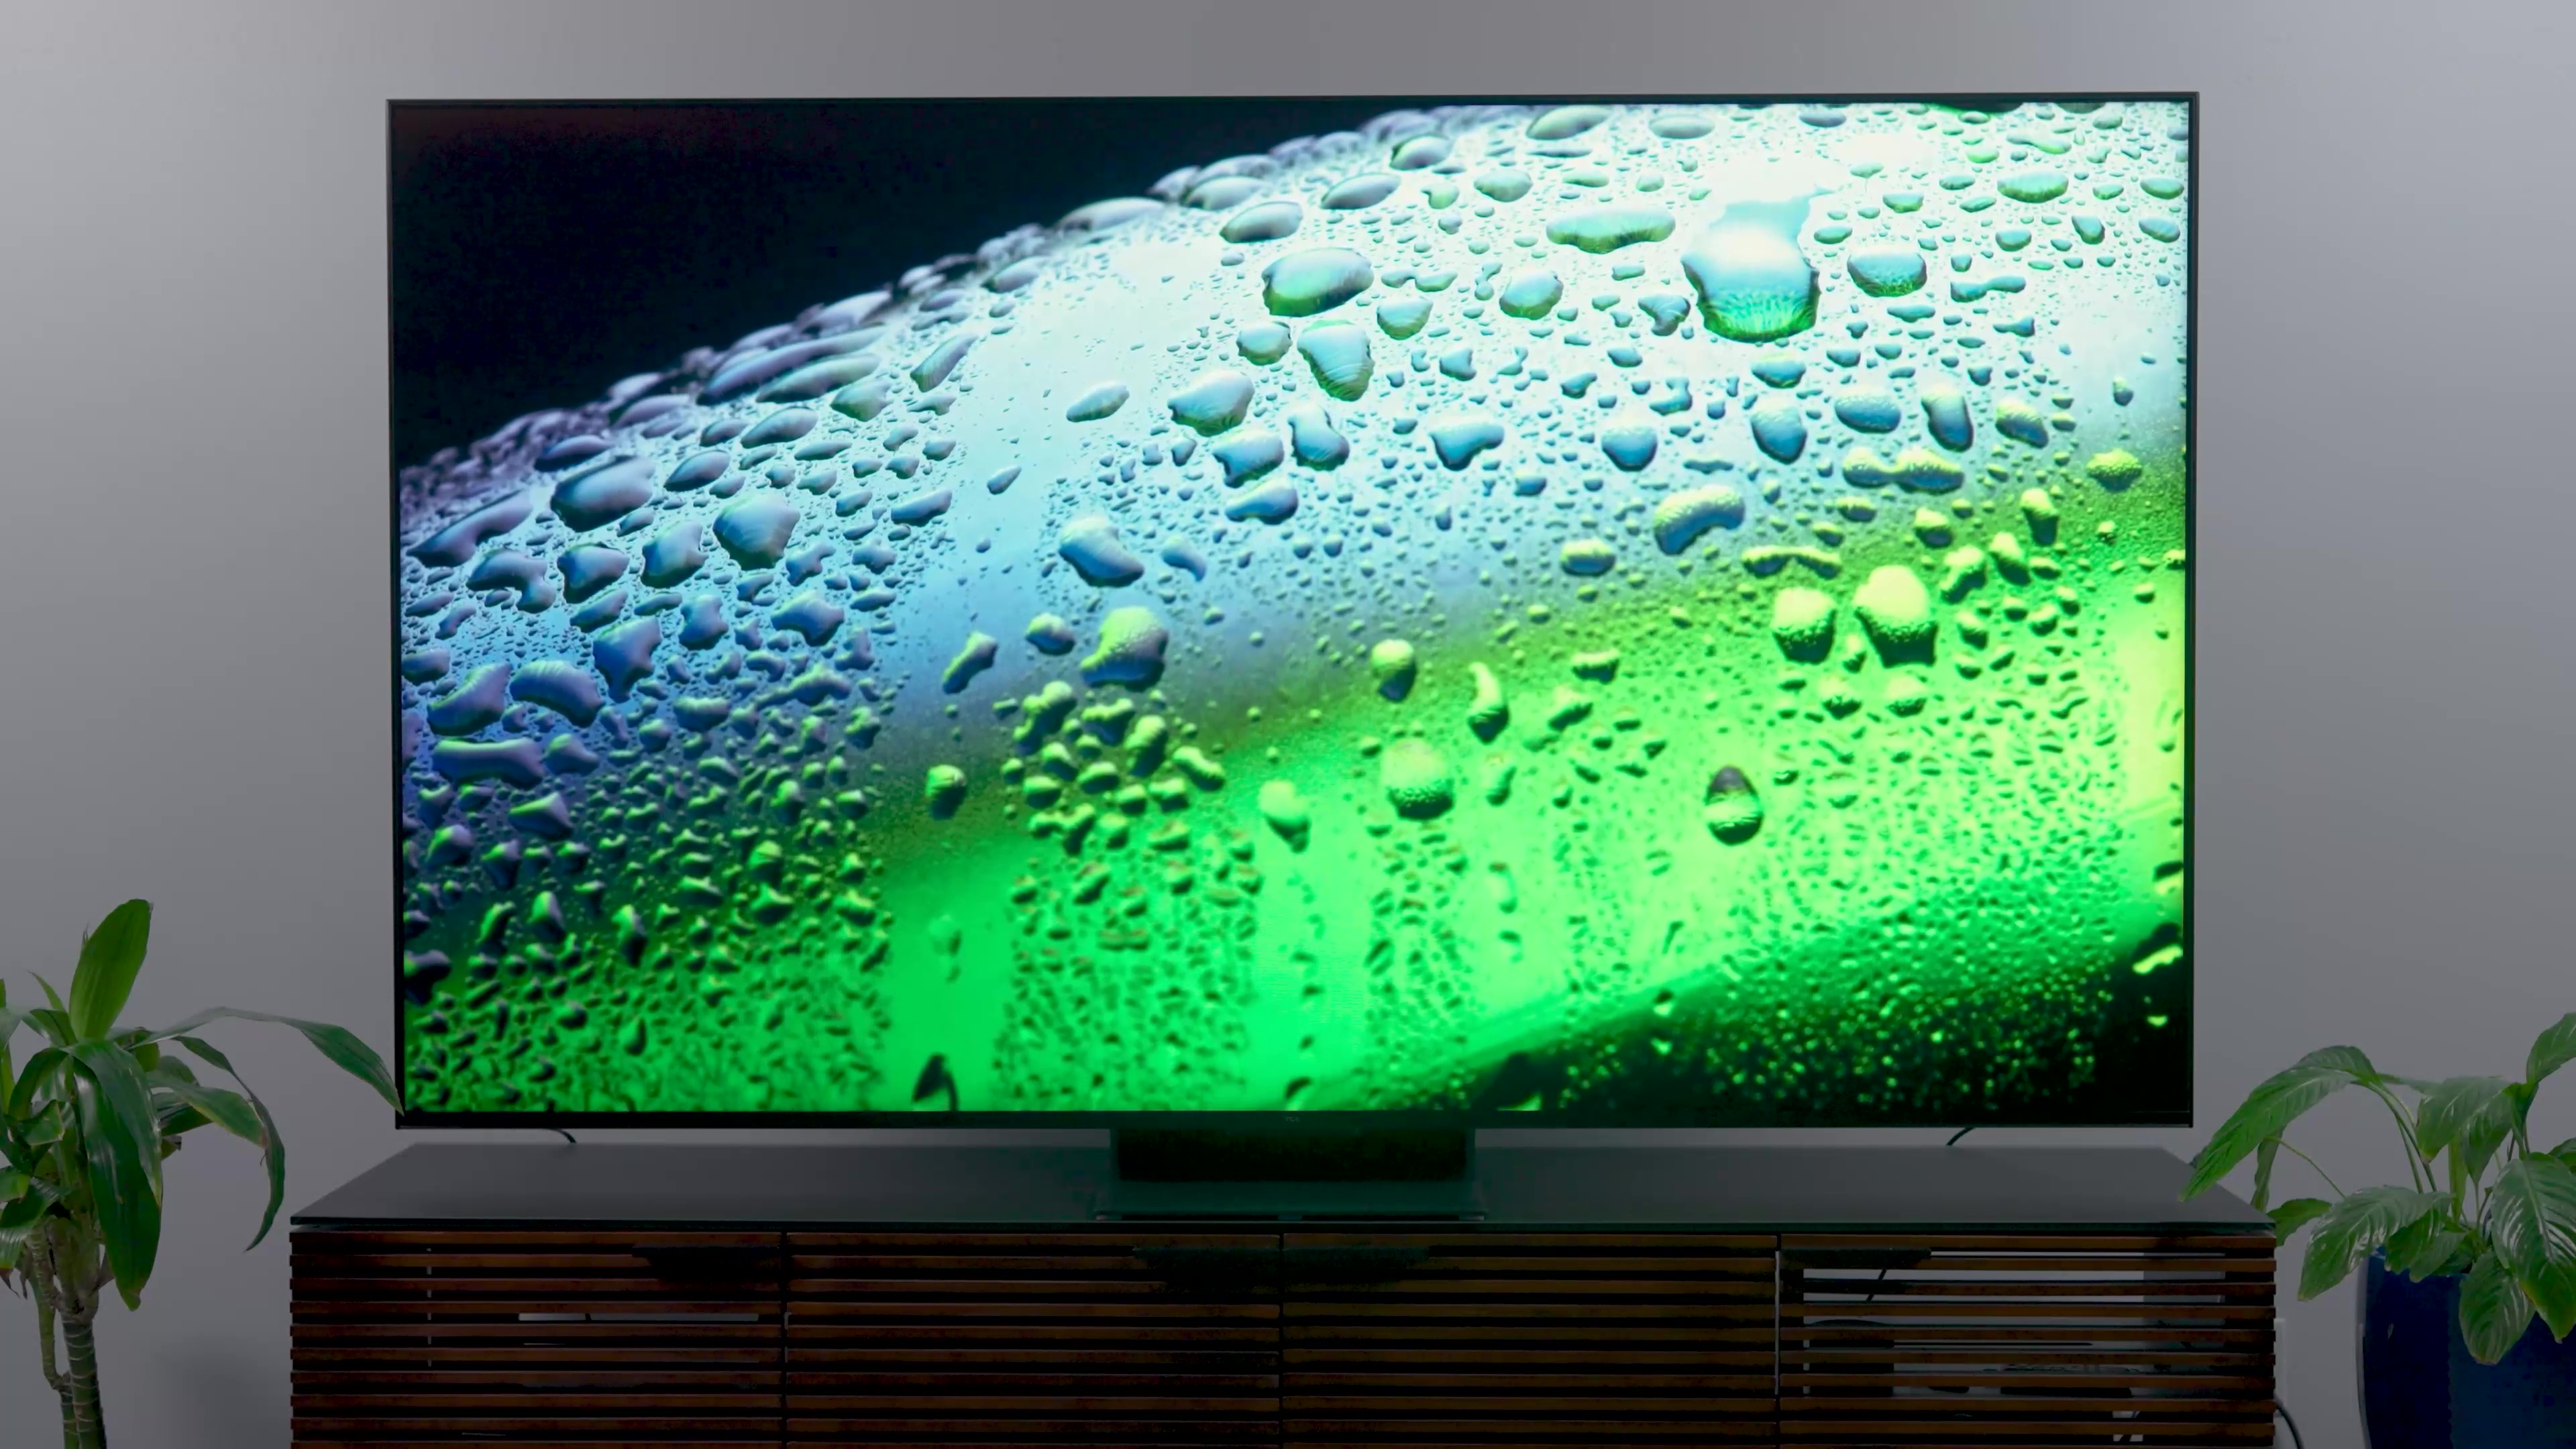 Chromecast Google TV HD 4K Remote Control Wall Mount Holder -- Buy 1 get 1  Free!